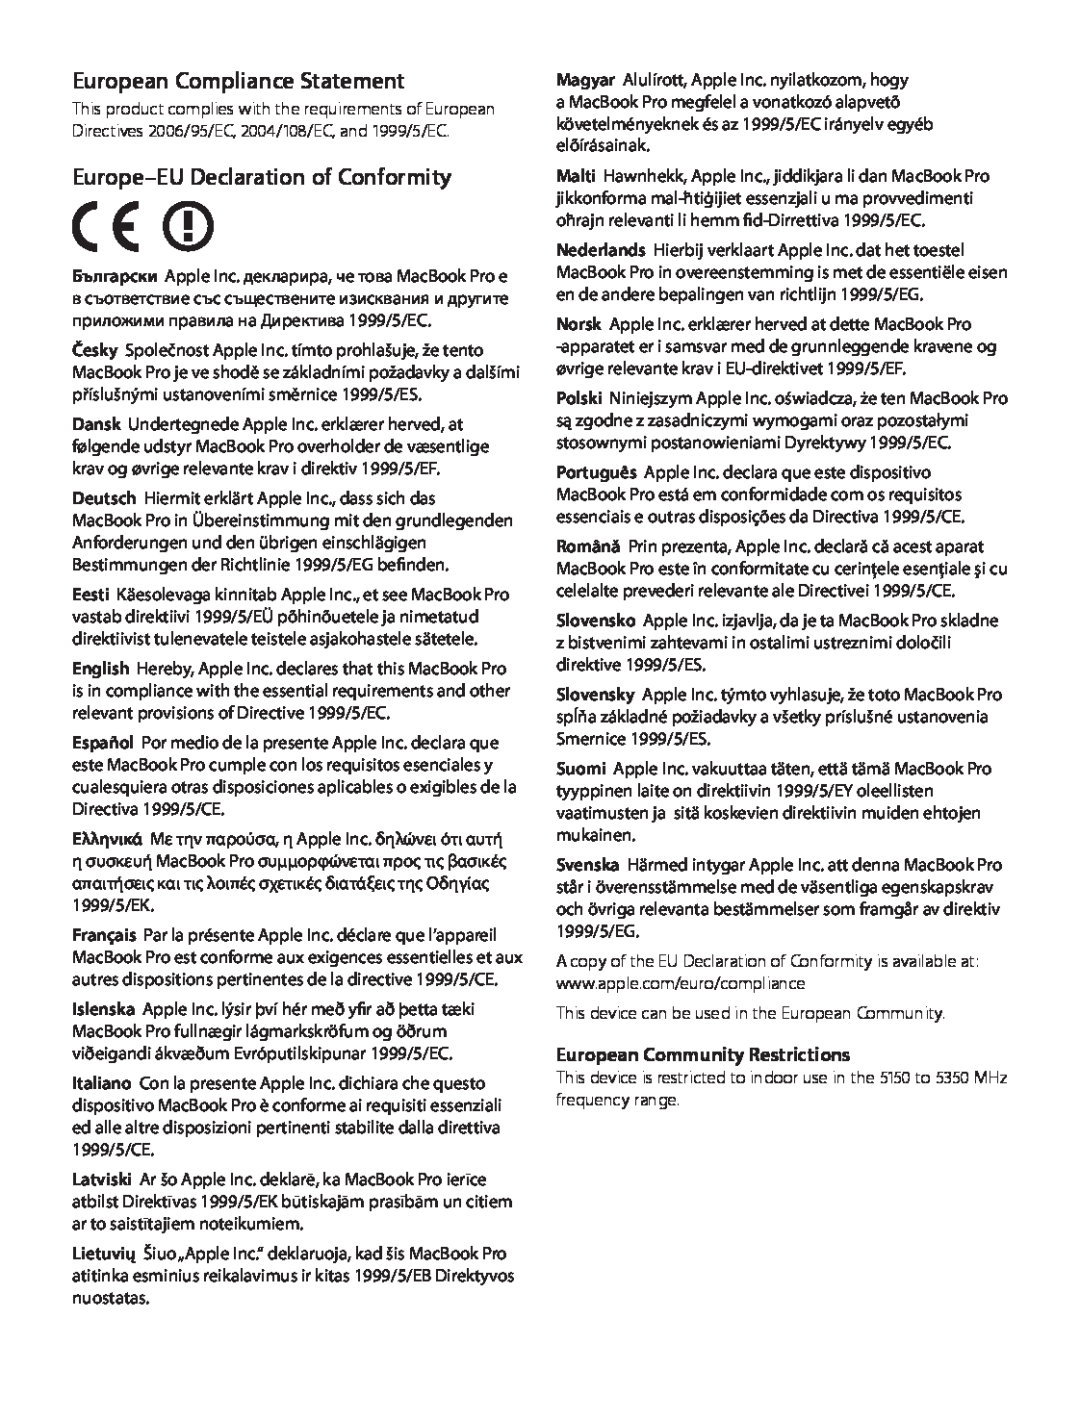 Apple MD101LL/A manual European Compliance Statement, Europe-EU Declaration of Conformity, European Community Restrictions 